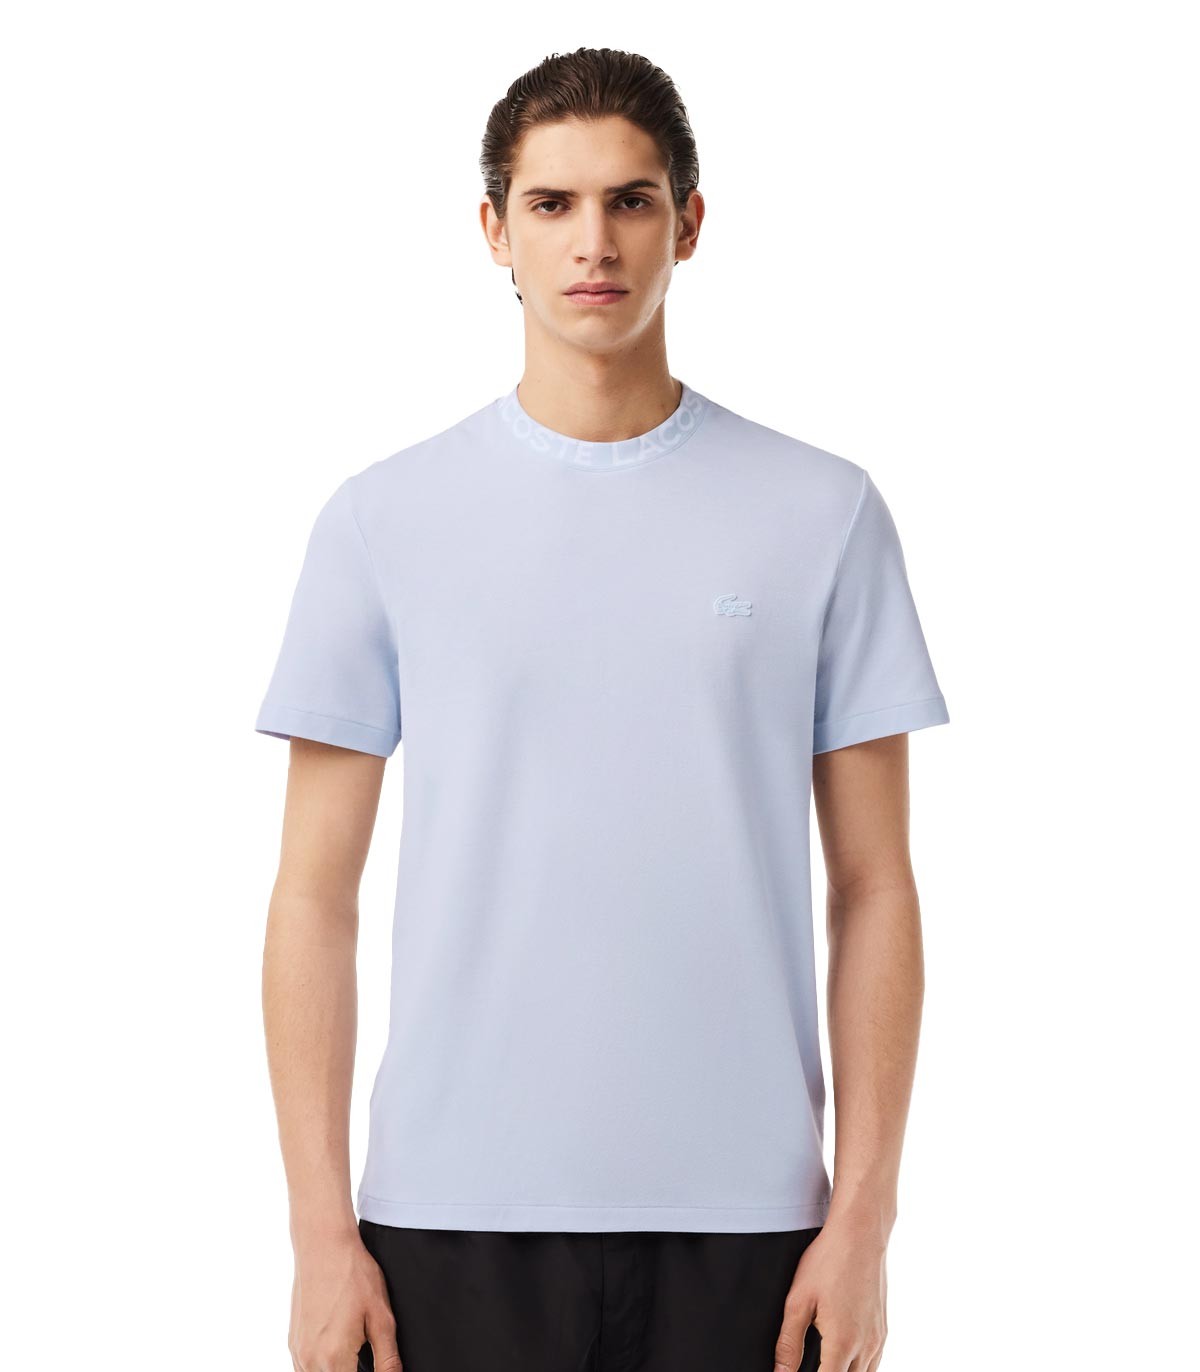 Lacoste - Camiseta en Piqué Ultraligero - Azul